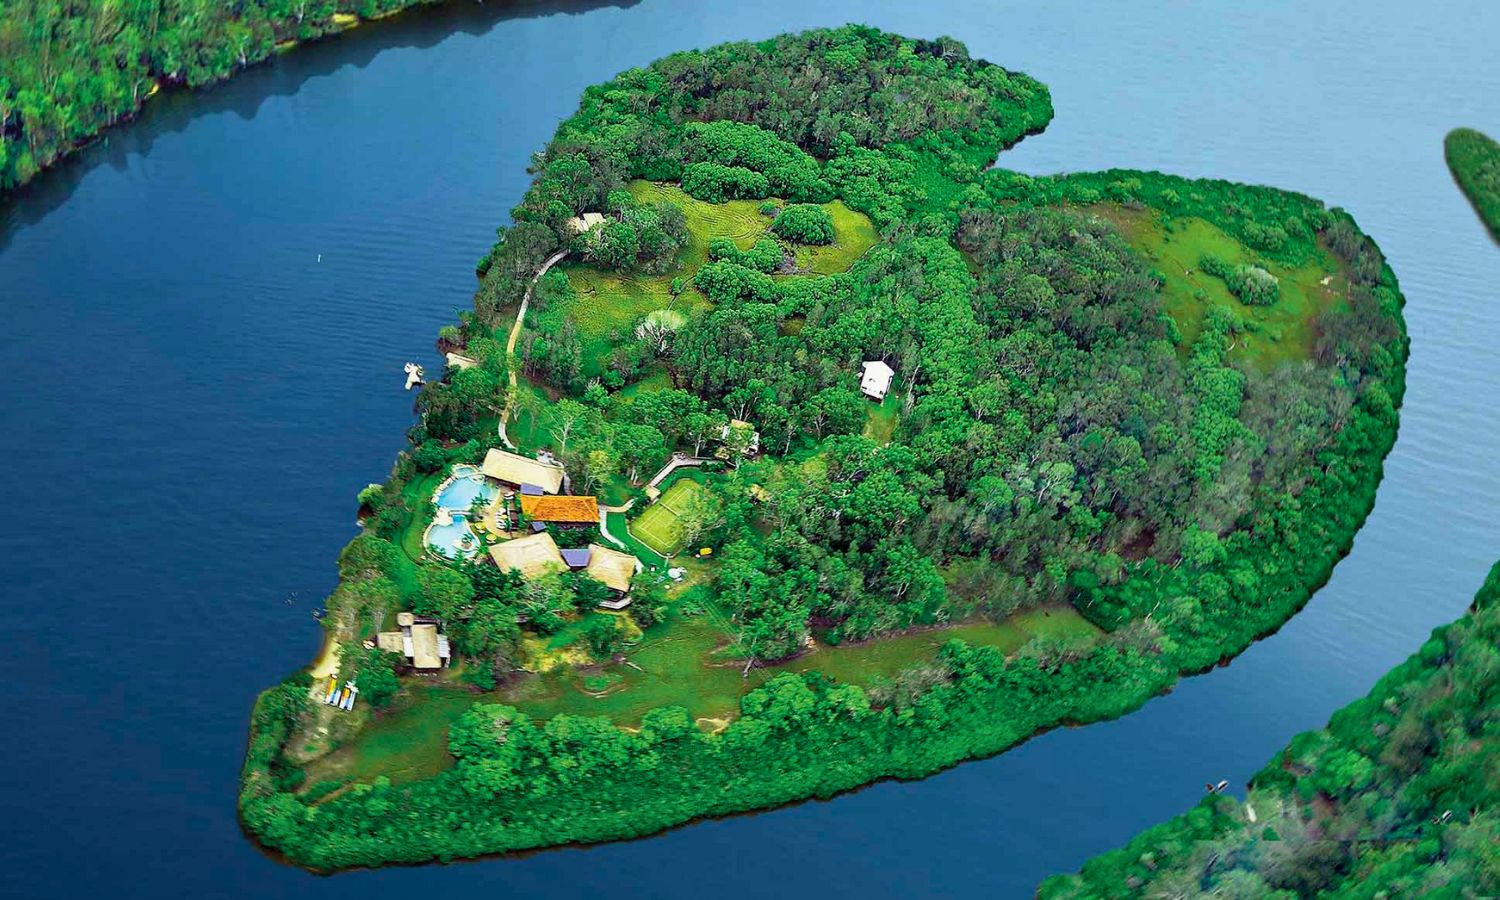 An image of an island resort in Australia